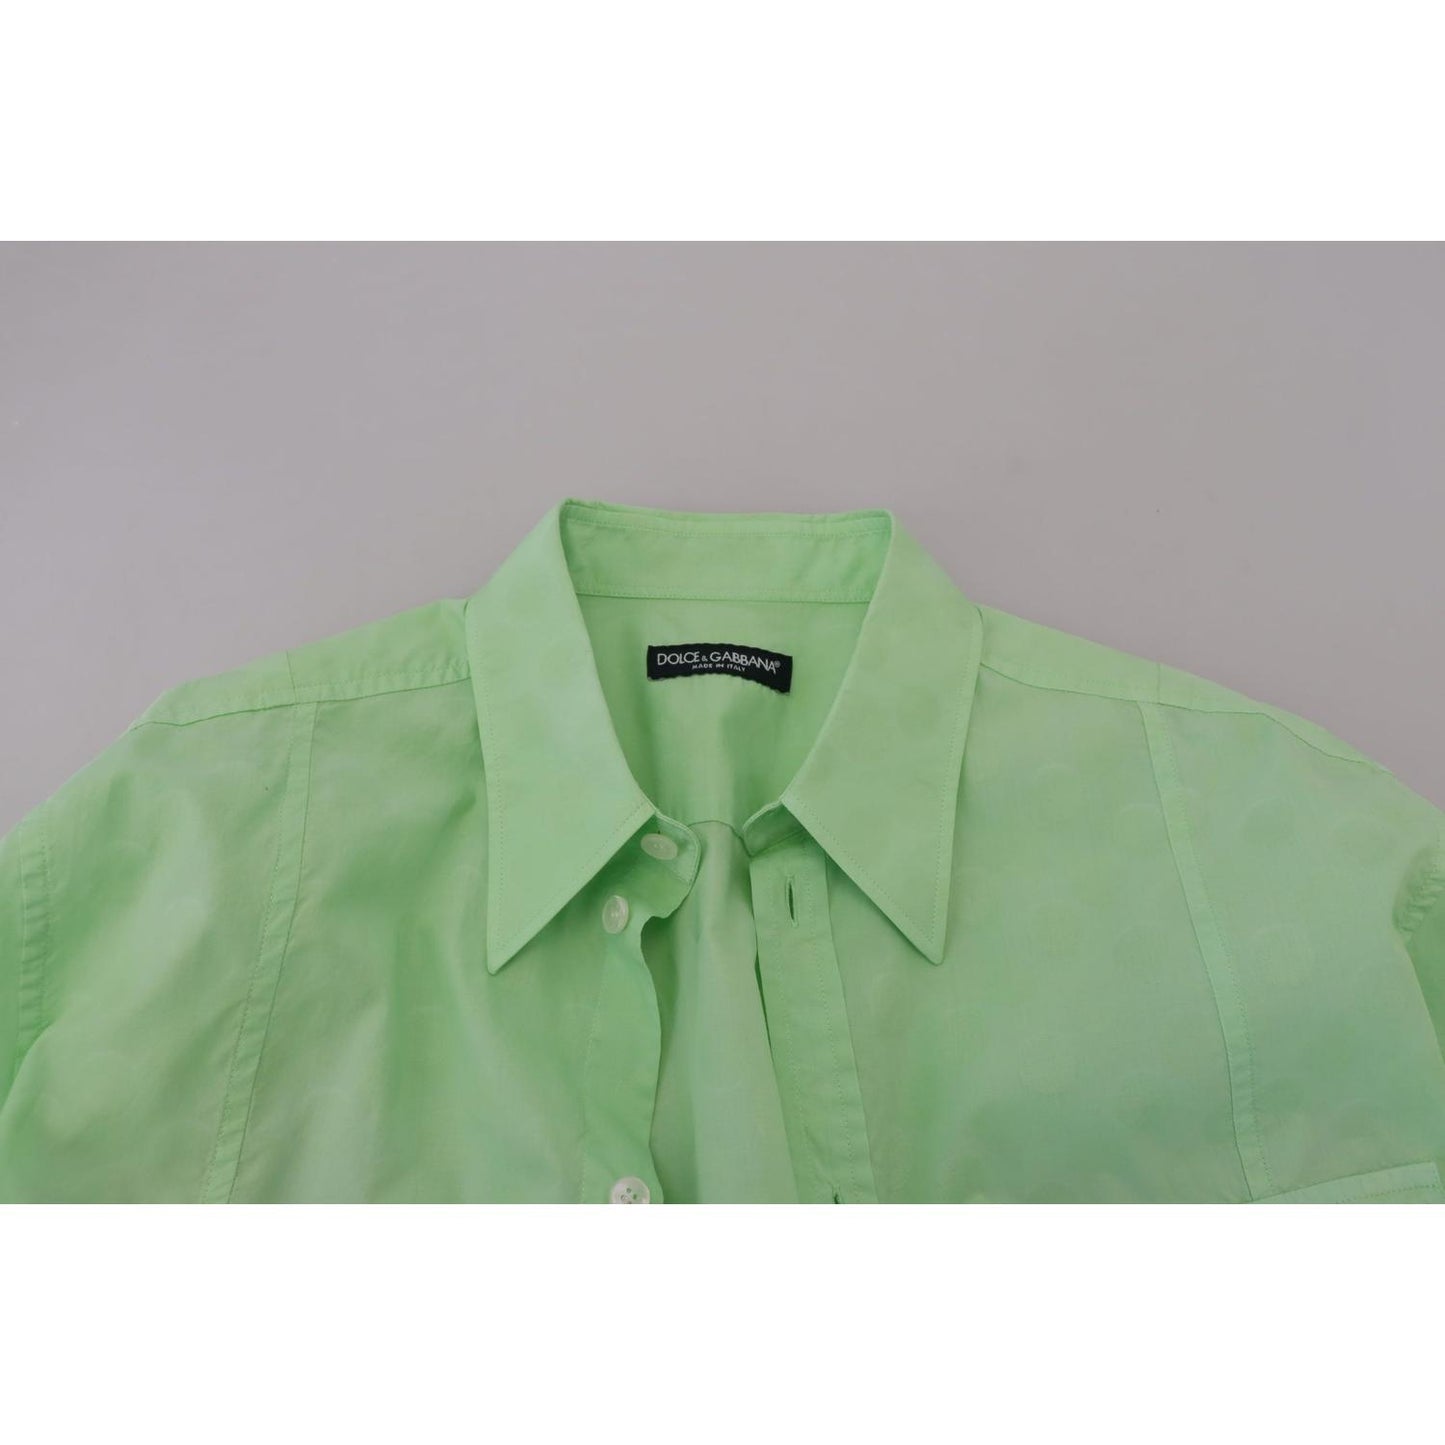 Dolce & Gabbana Mint Green Slim Fit Casual Button-Down Shirt mint-green-long-sleeves-button-down-shirt